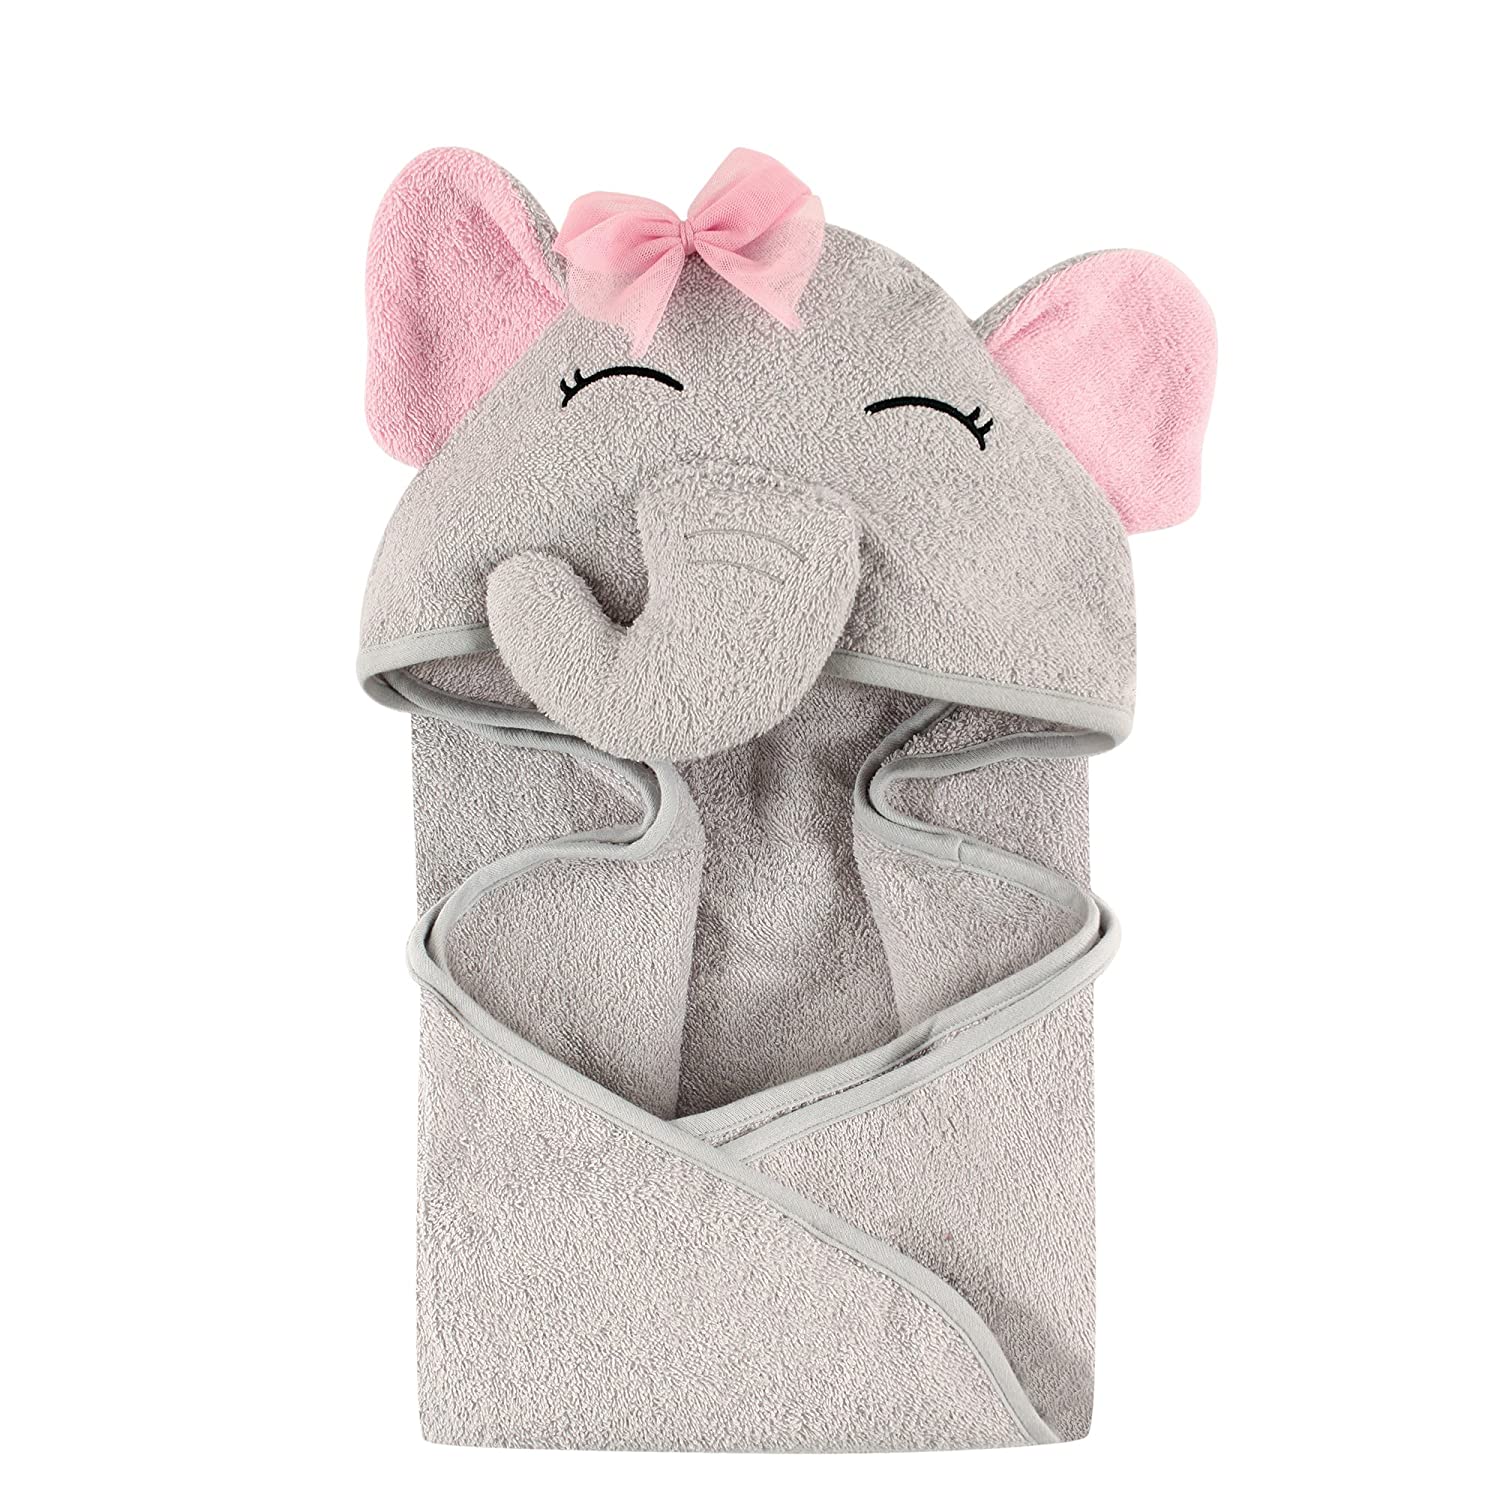 Hudson Baby Woven Terry Cloth Elephant Newborn Baby Towel